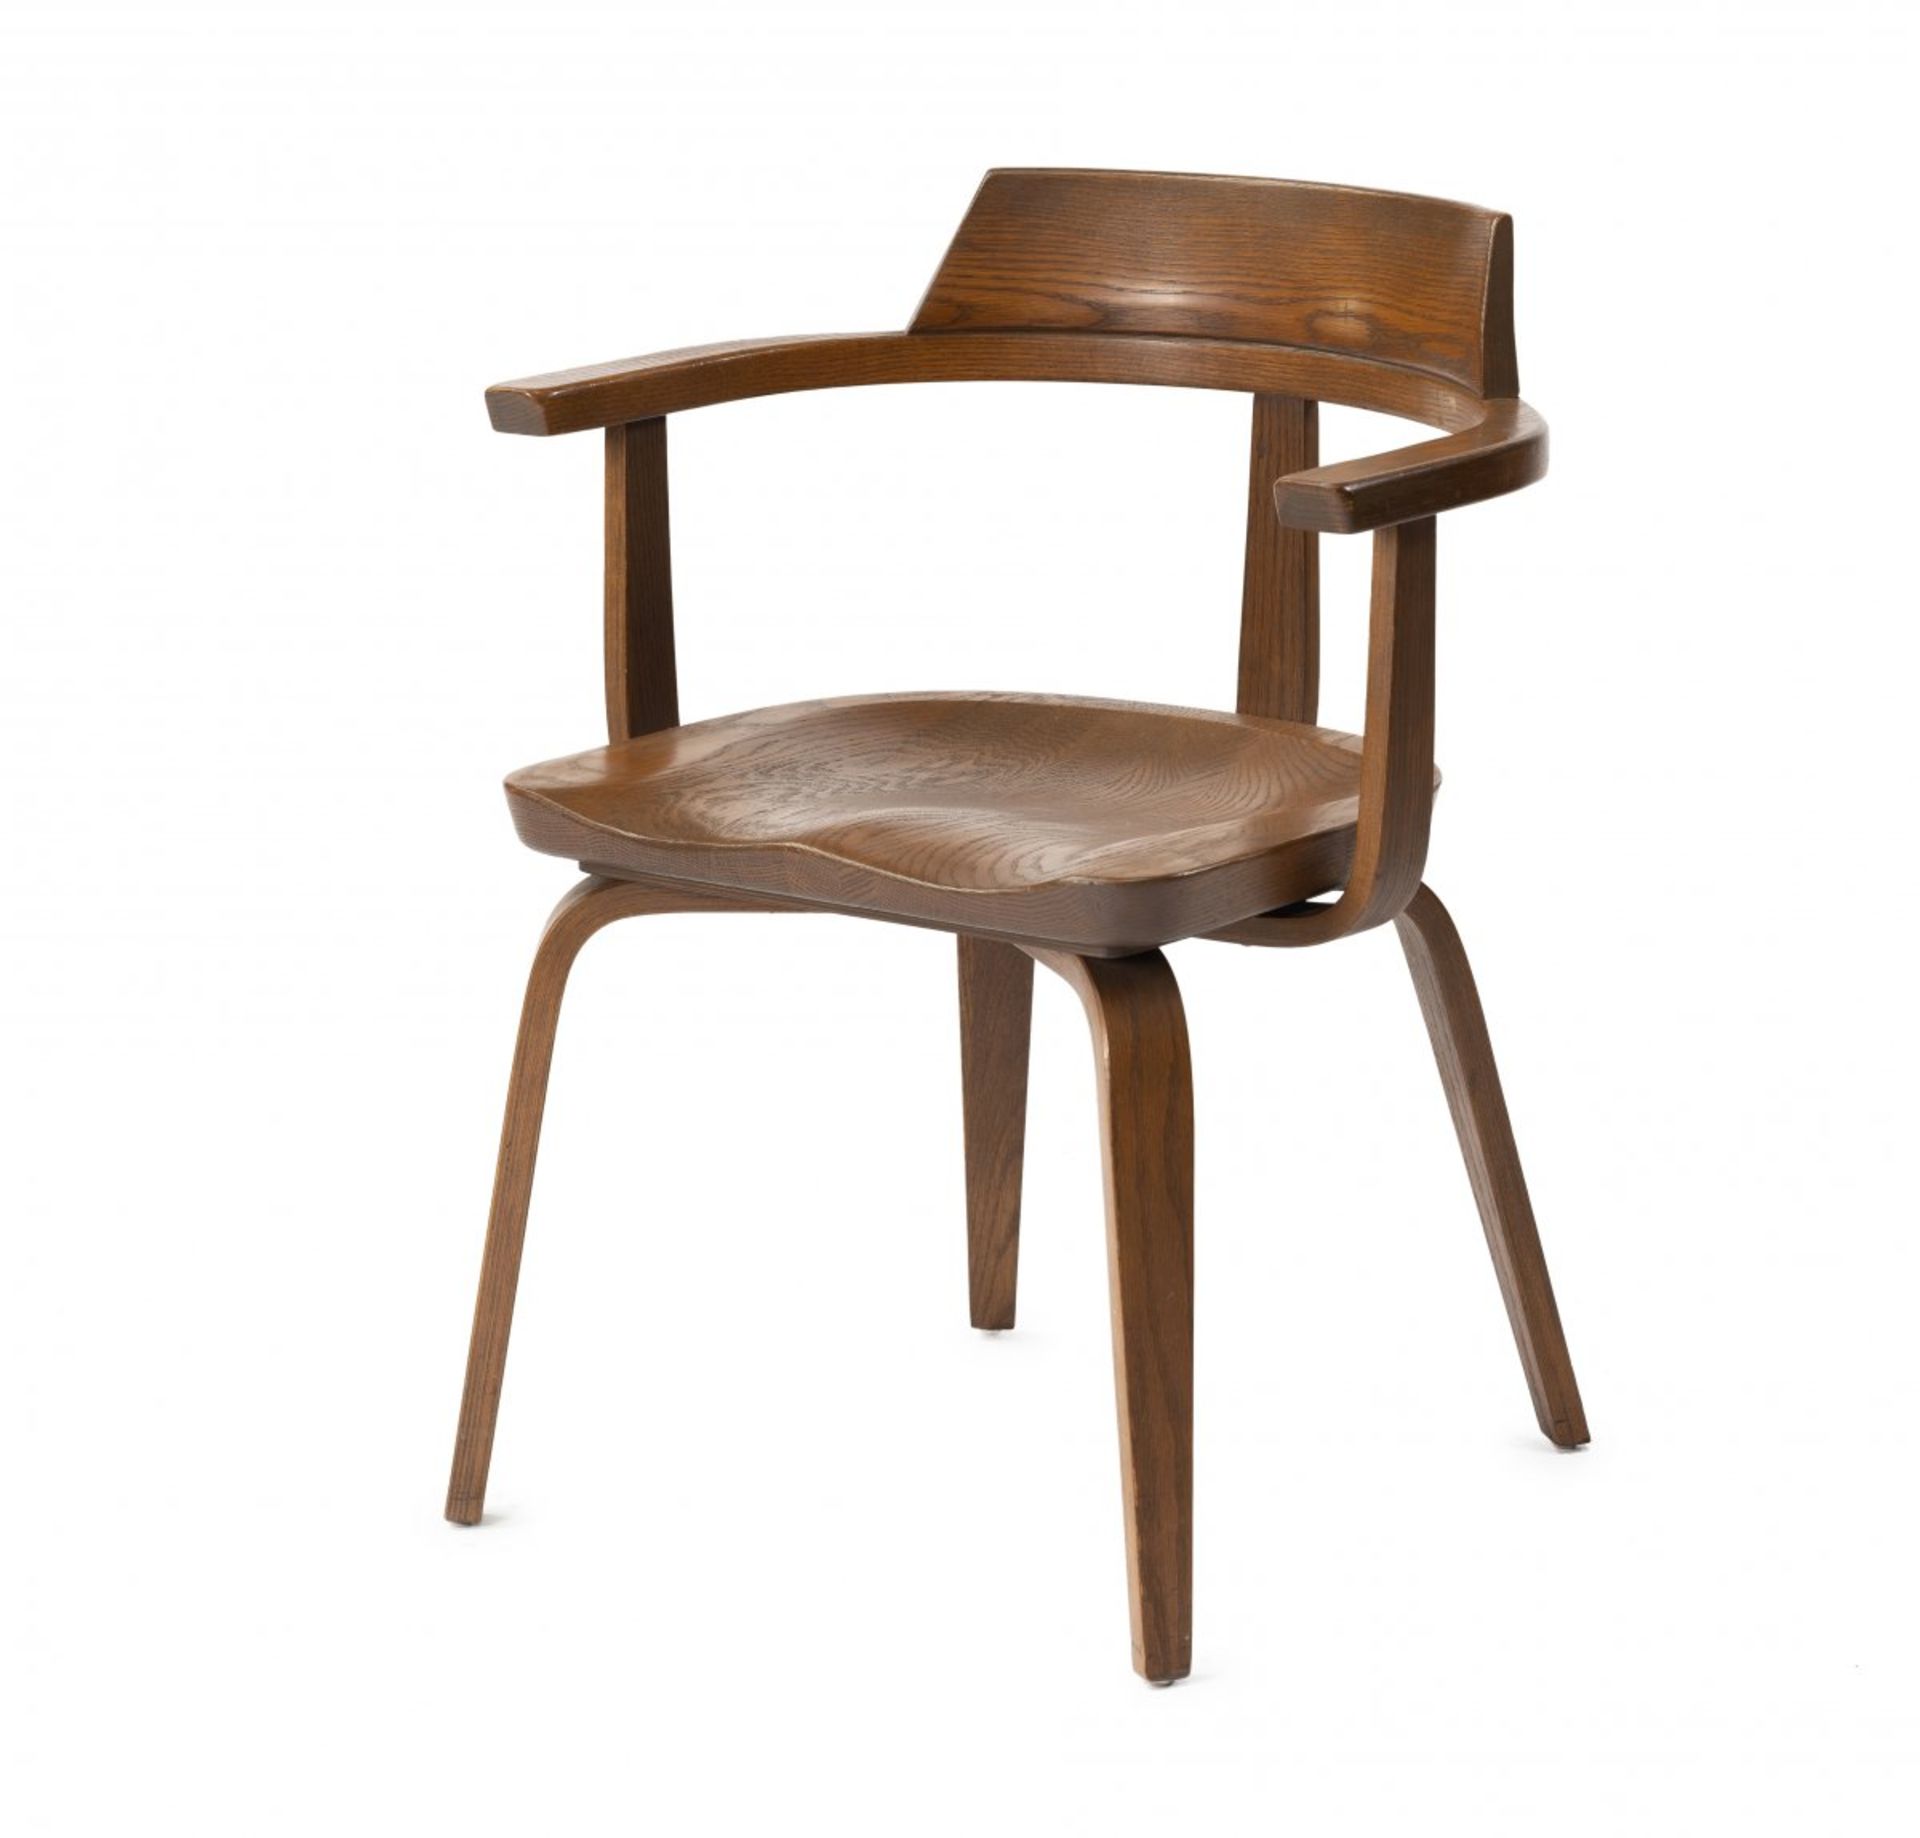 Walter Gropius; Benjamin C. Thompson, 'W 199' armchair, 1951/52'W 199' armchair, 1951/52H. 74.5 x